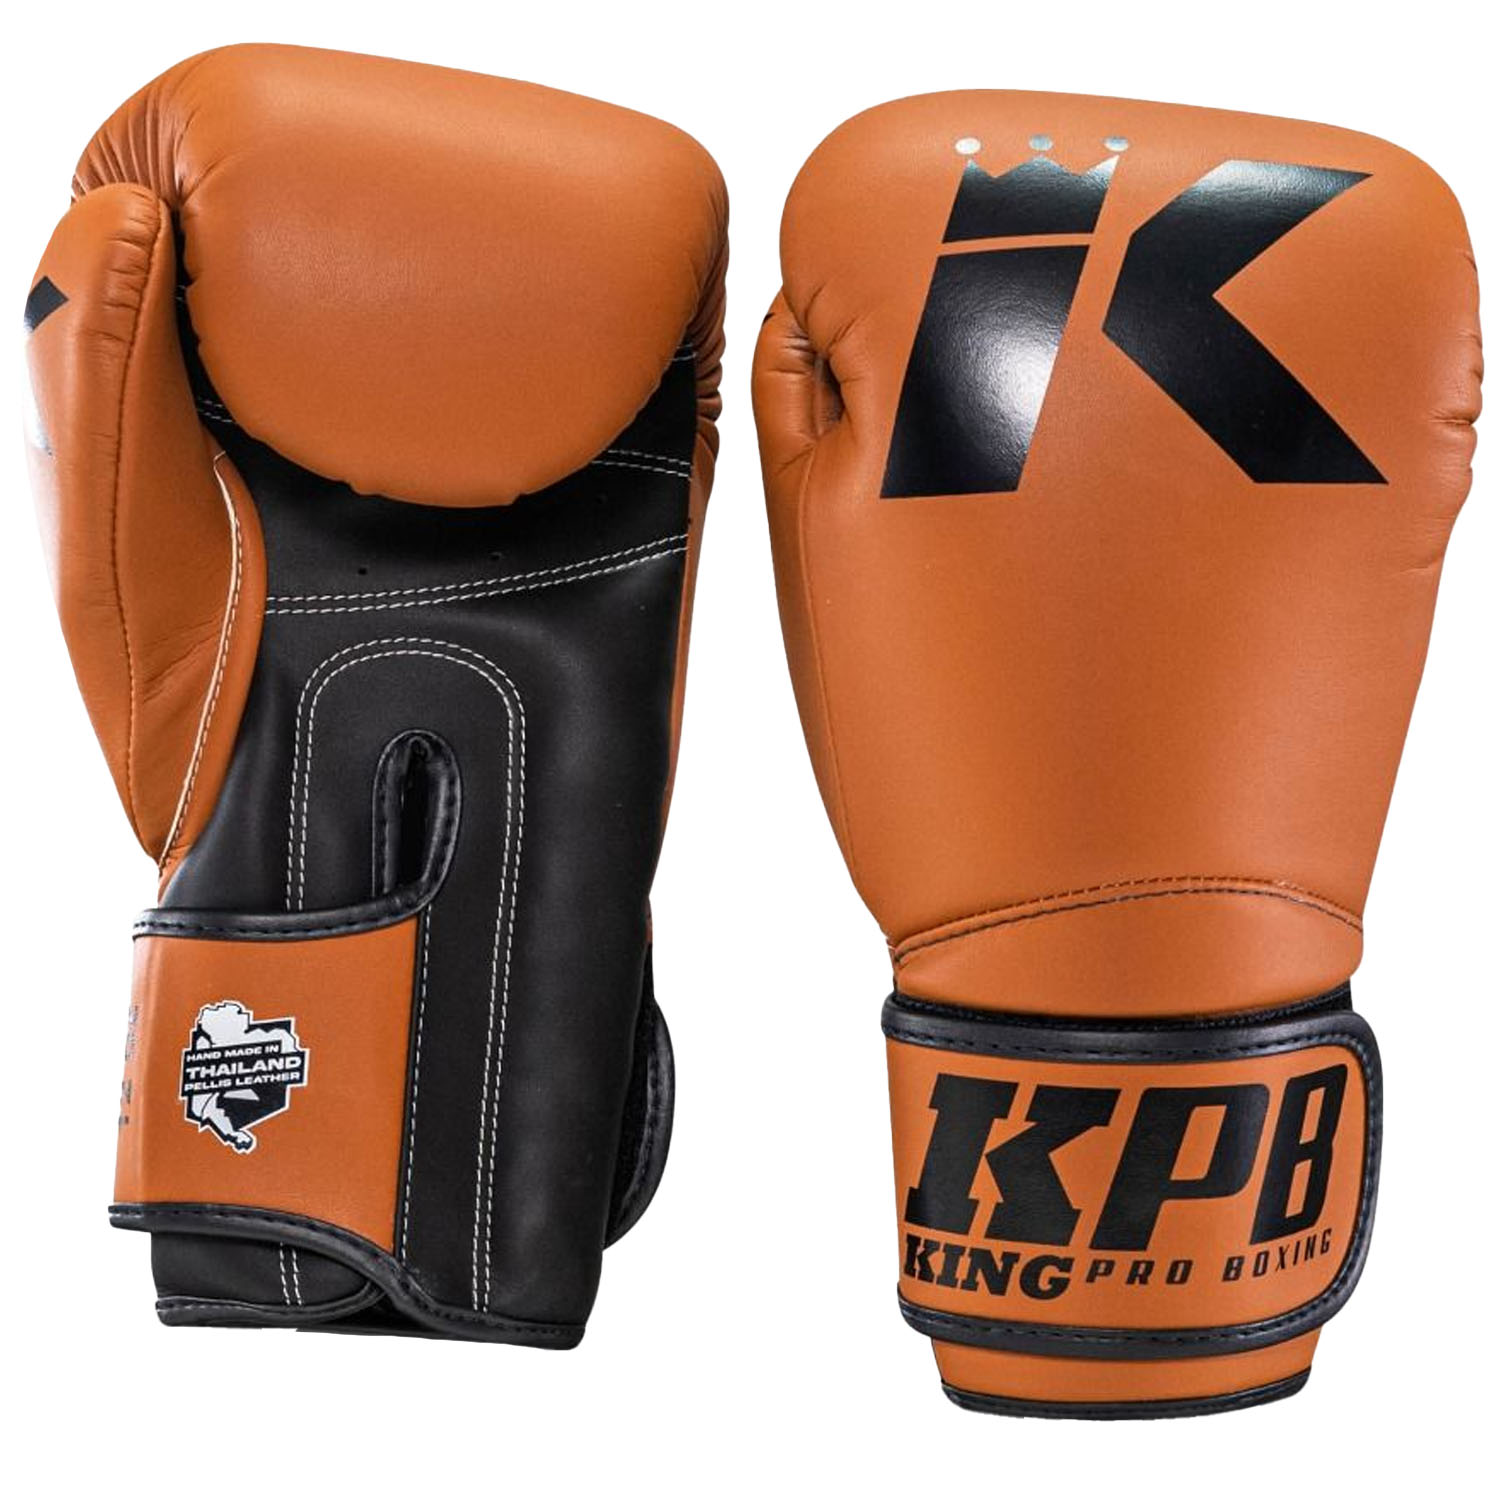 KING PRO BOXING Boxing Gloves, BGK 3, orange, 10 Oz